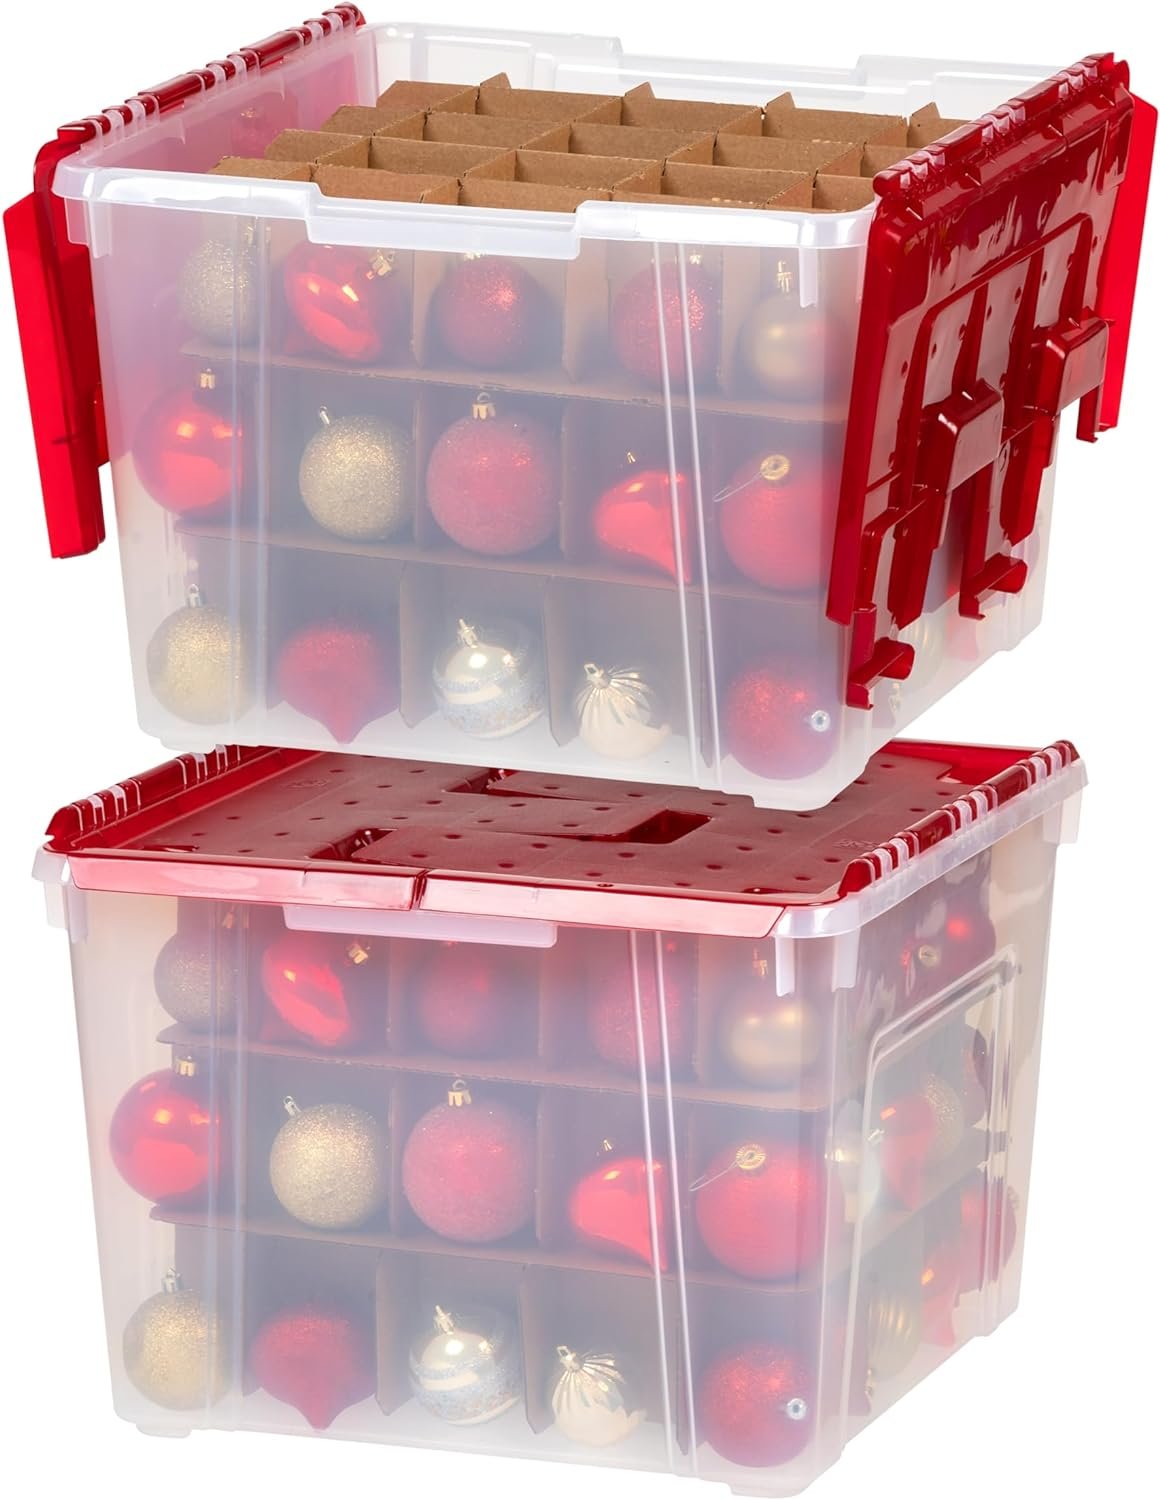 IRIS USA Ornament Storage Box Review